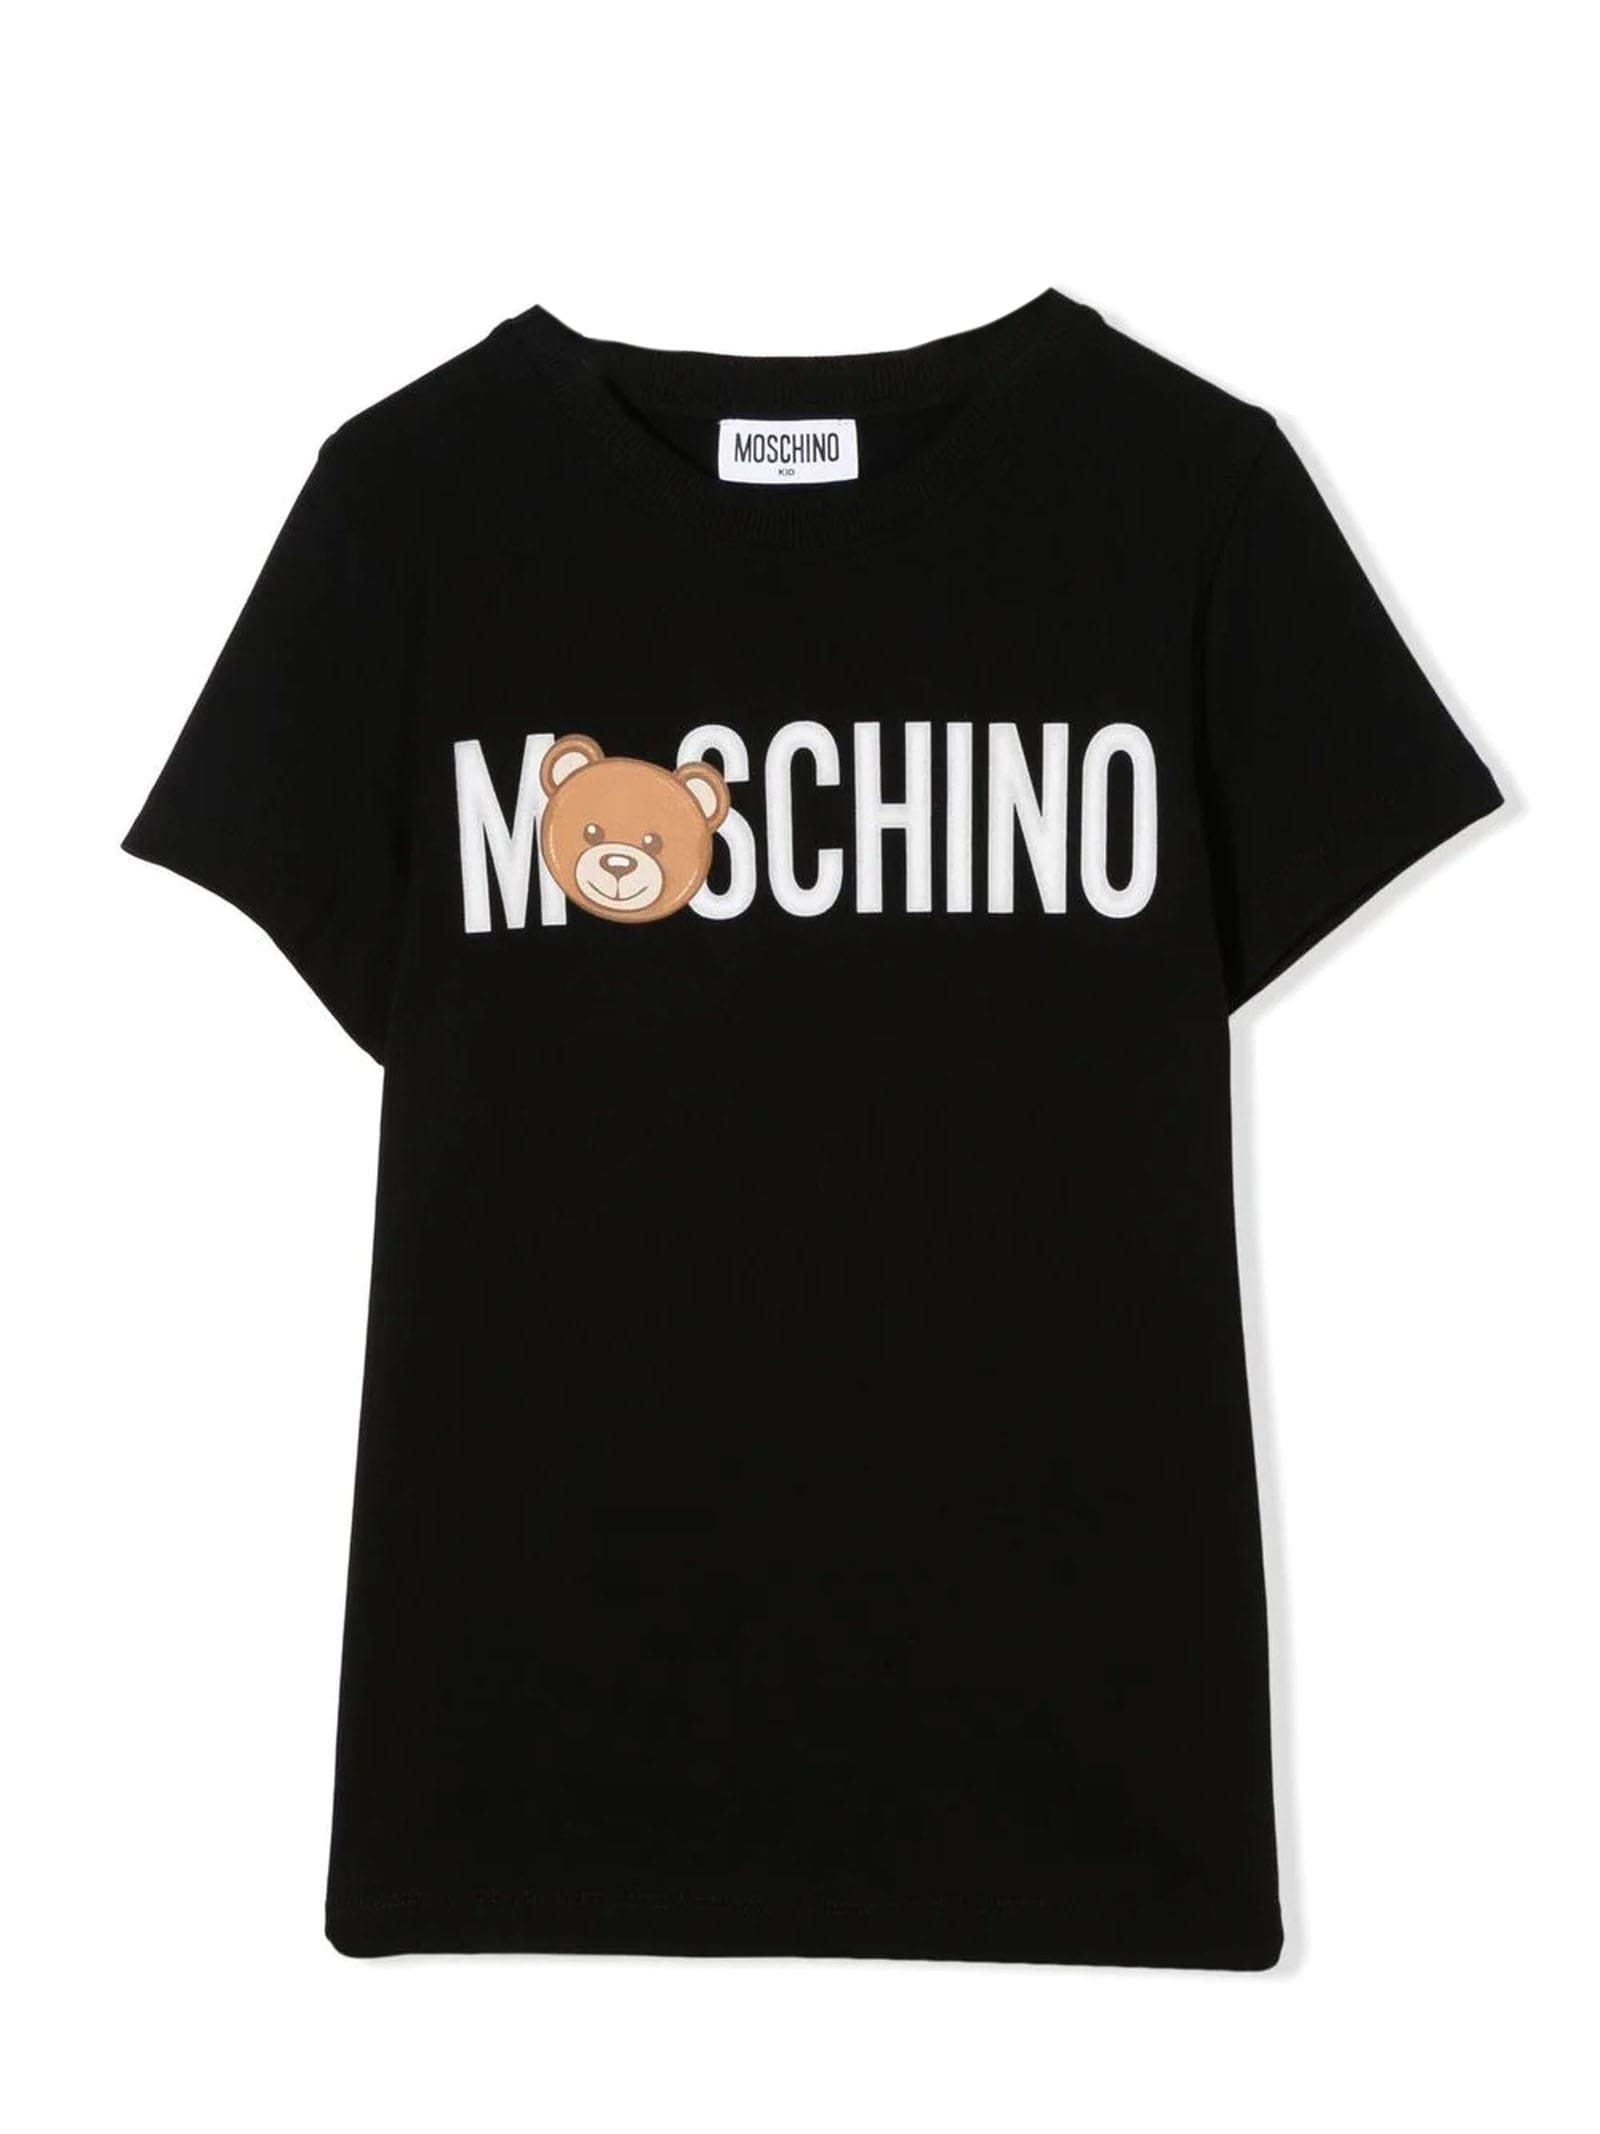 Moschino Black Cotton Tshirt